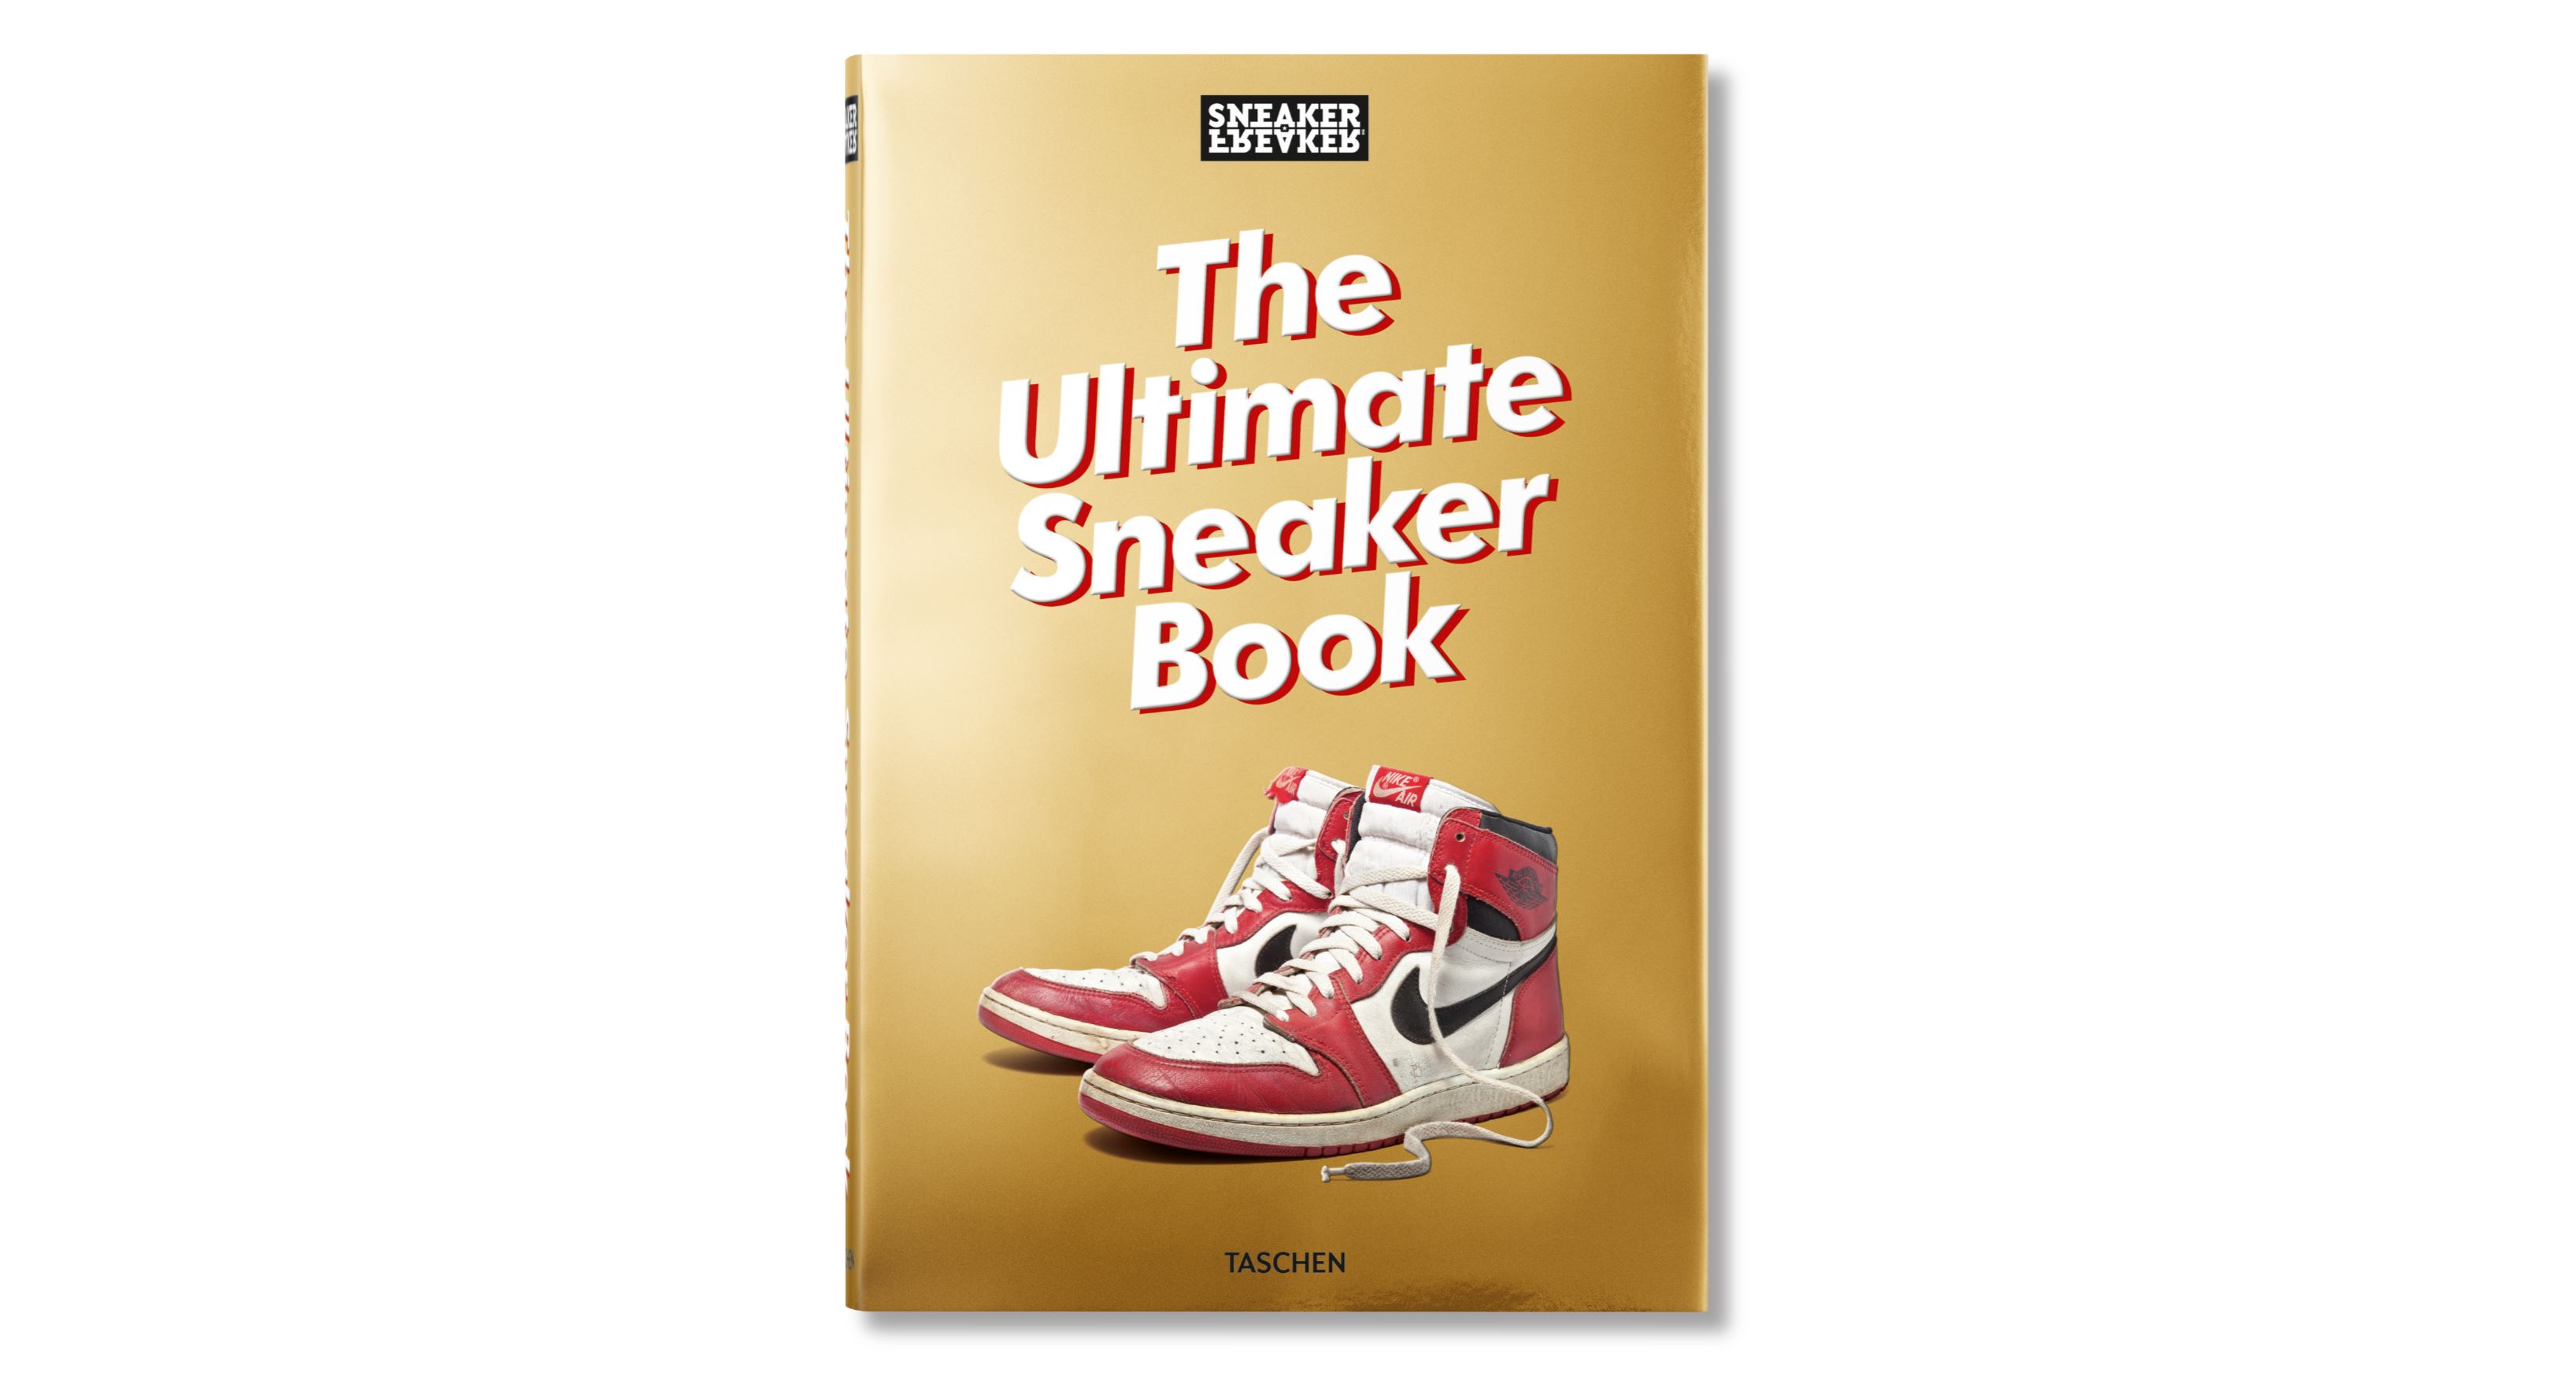 sneaker freaker the ultimate sneaker book